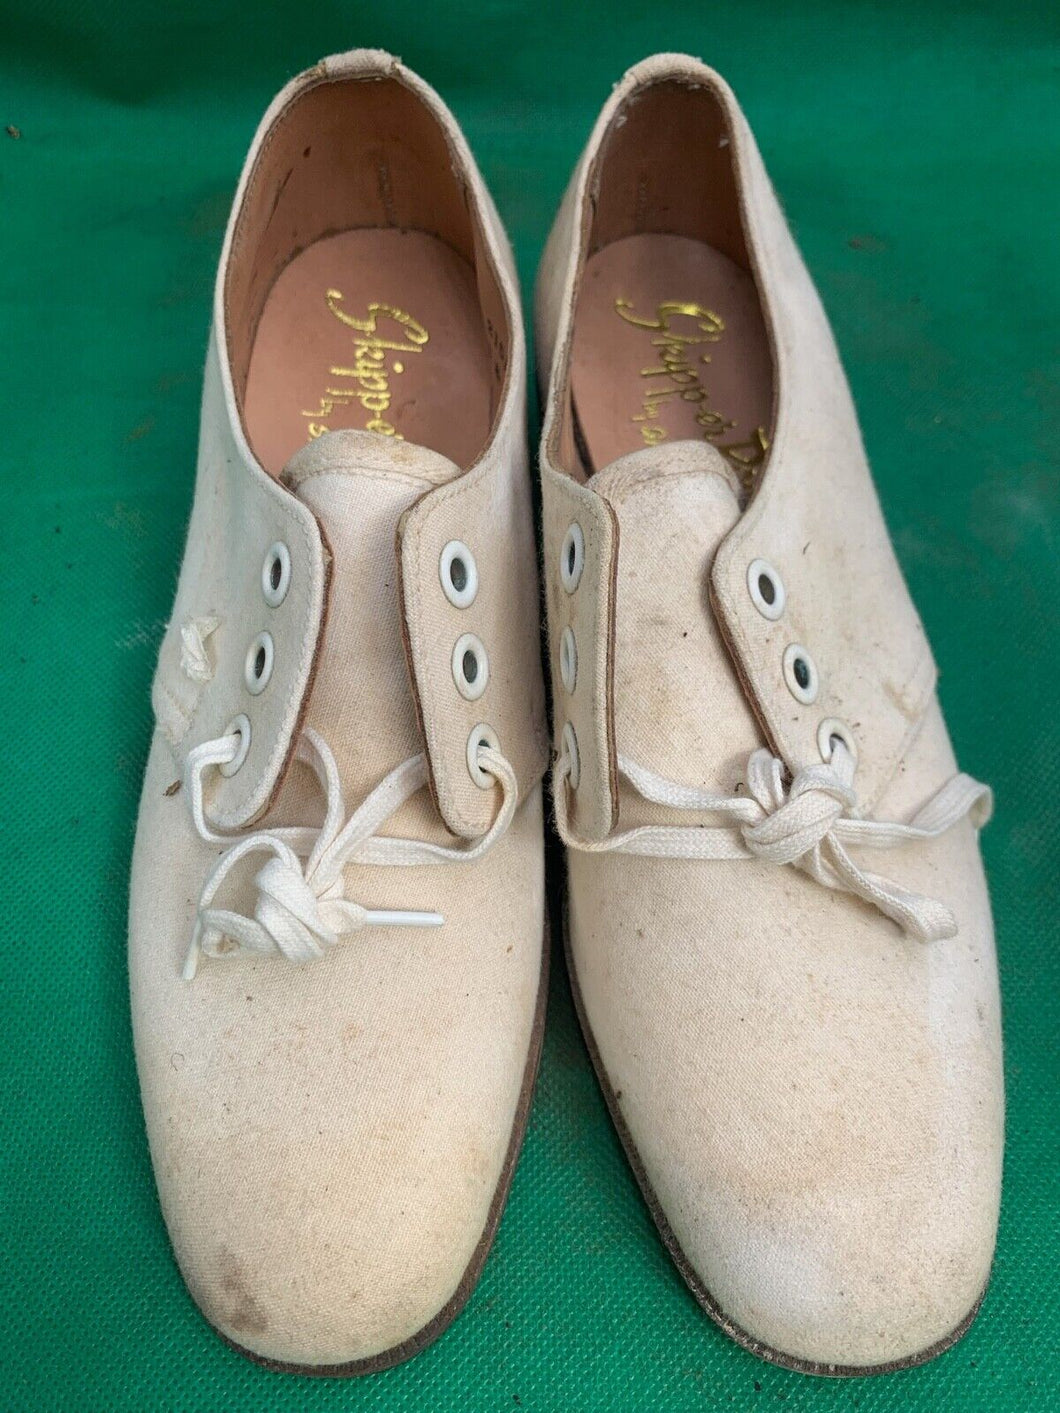 Original WW2 British Army Women's White Summer Shoes - ATS WAAF - Size 215M